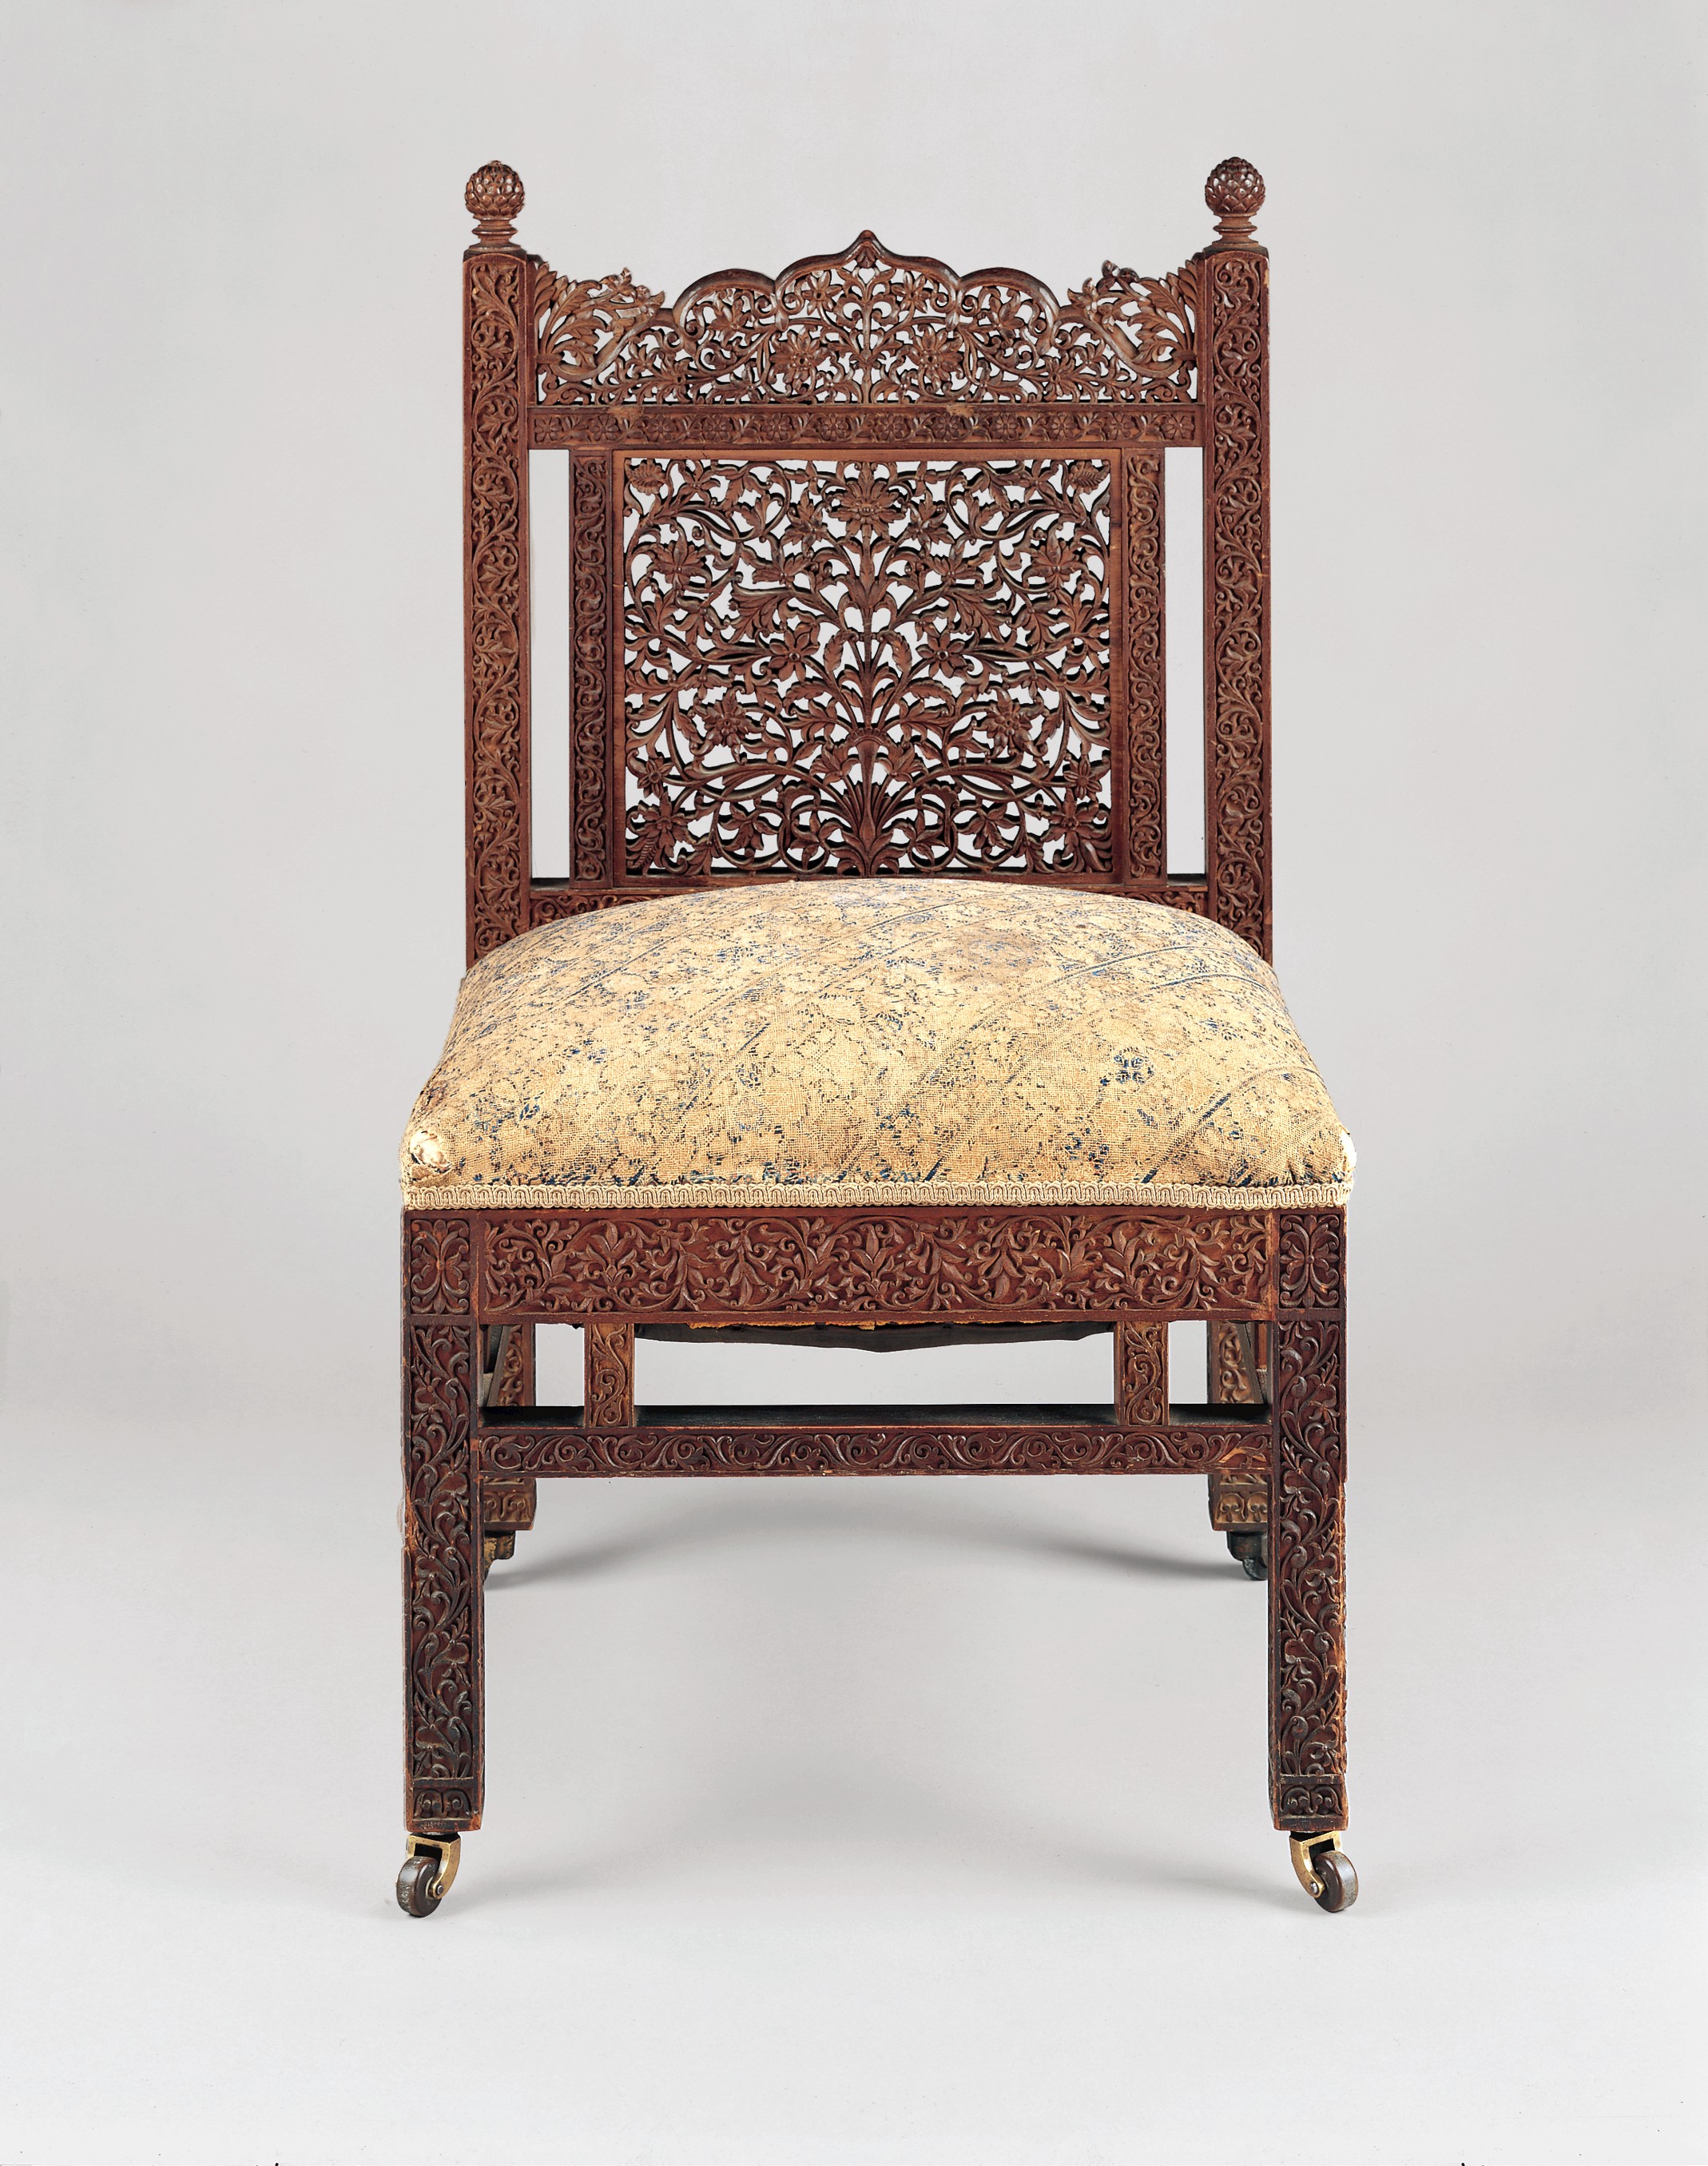 Chaise by Lockwood de Forest - c. 1881-6 Metropolitan Museum of Art